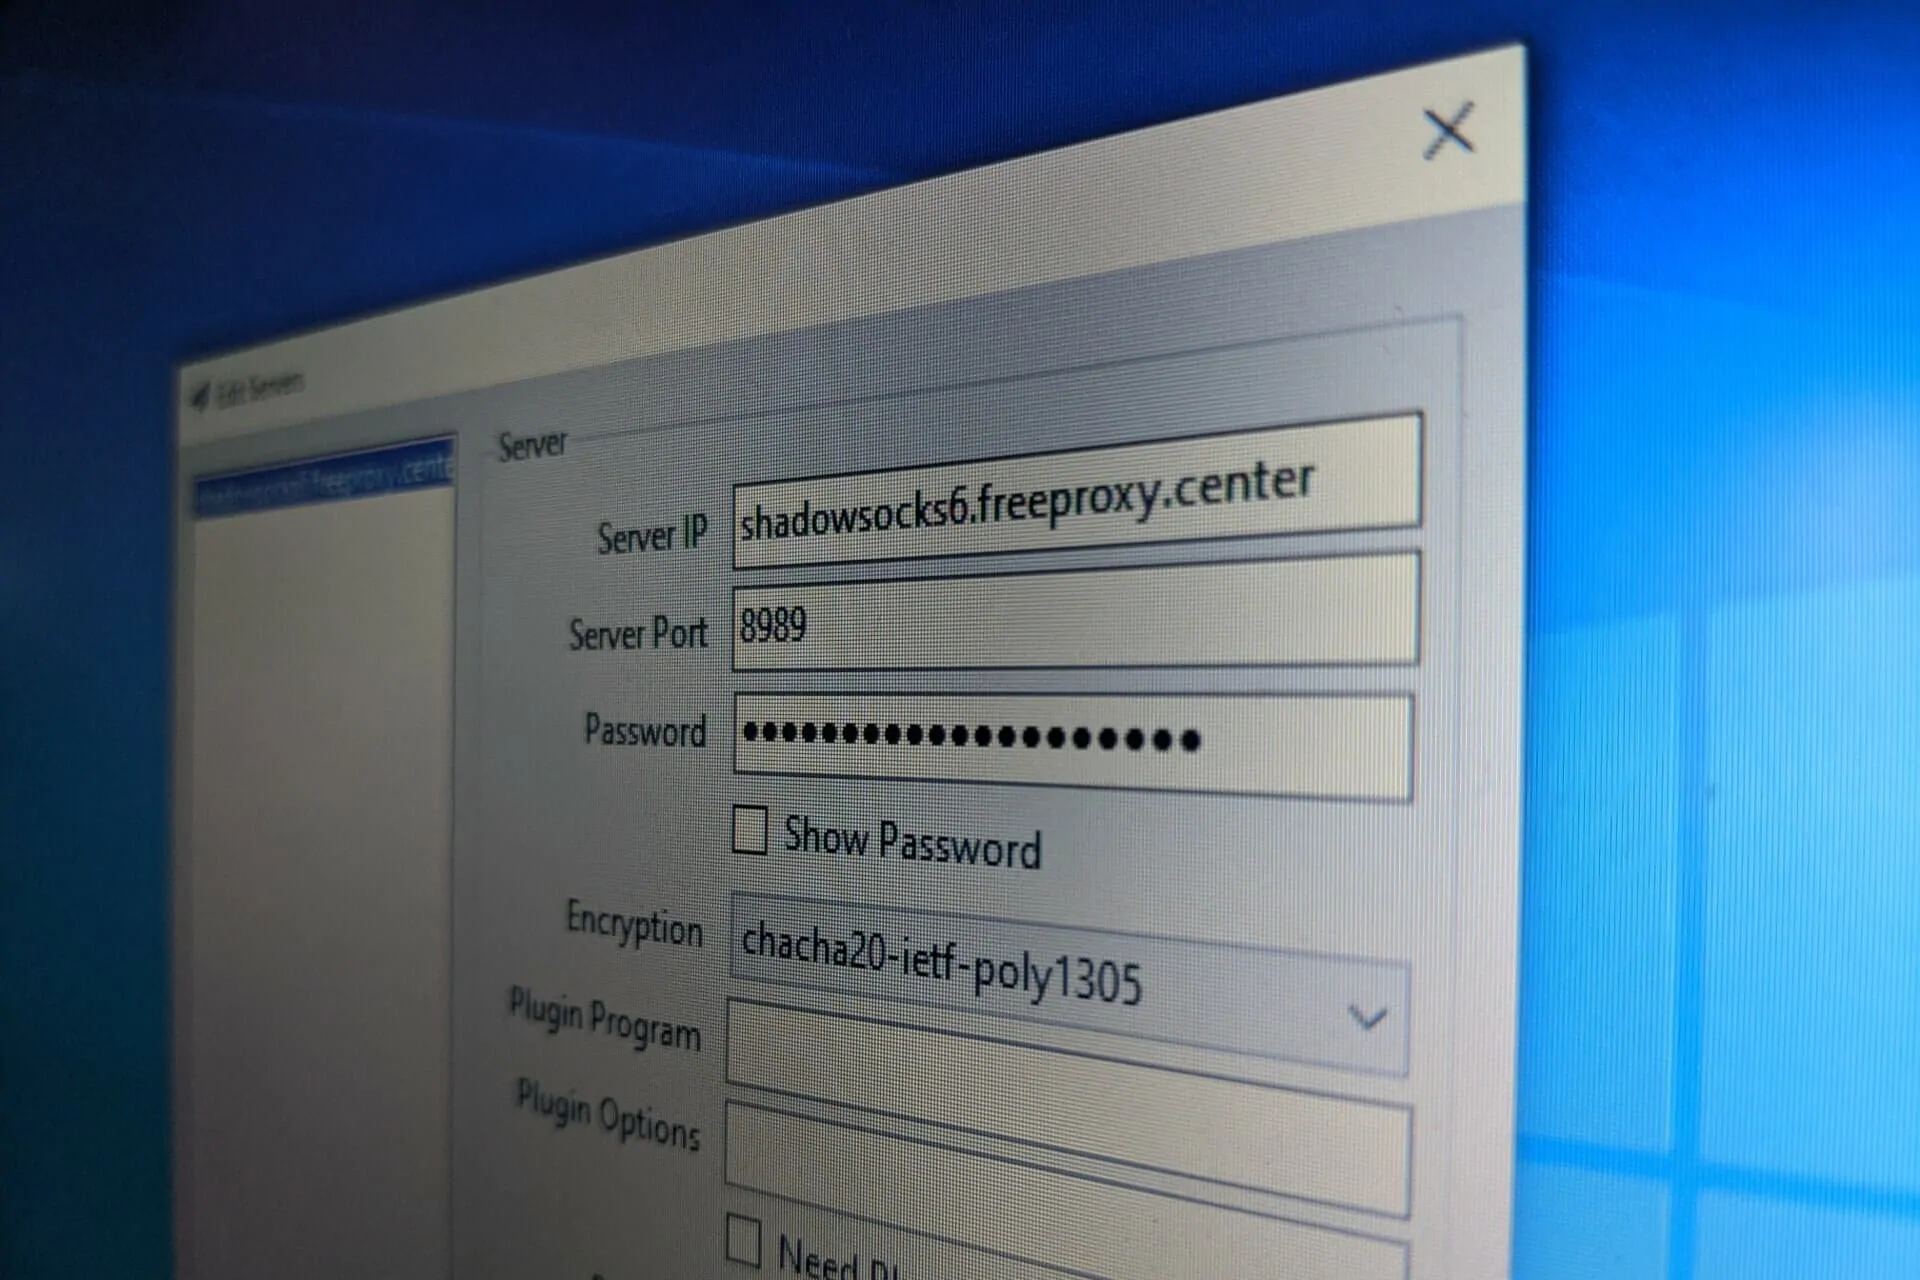 Windows 10 shows Shadowsocks